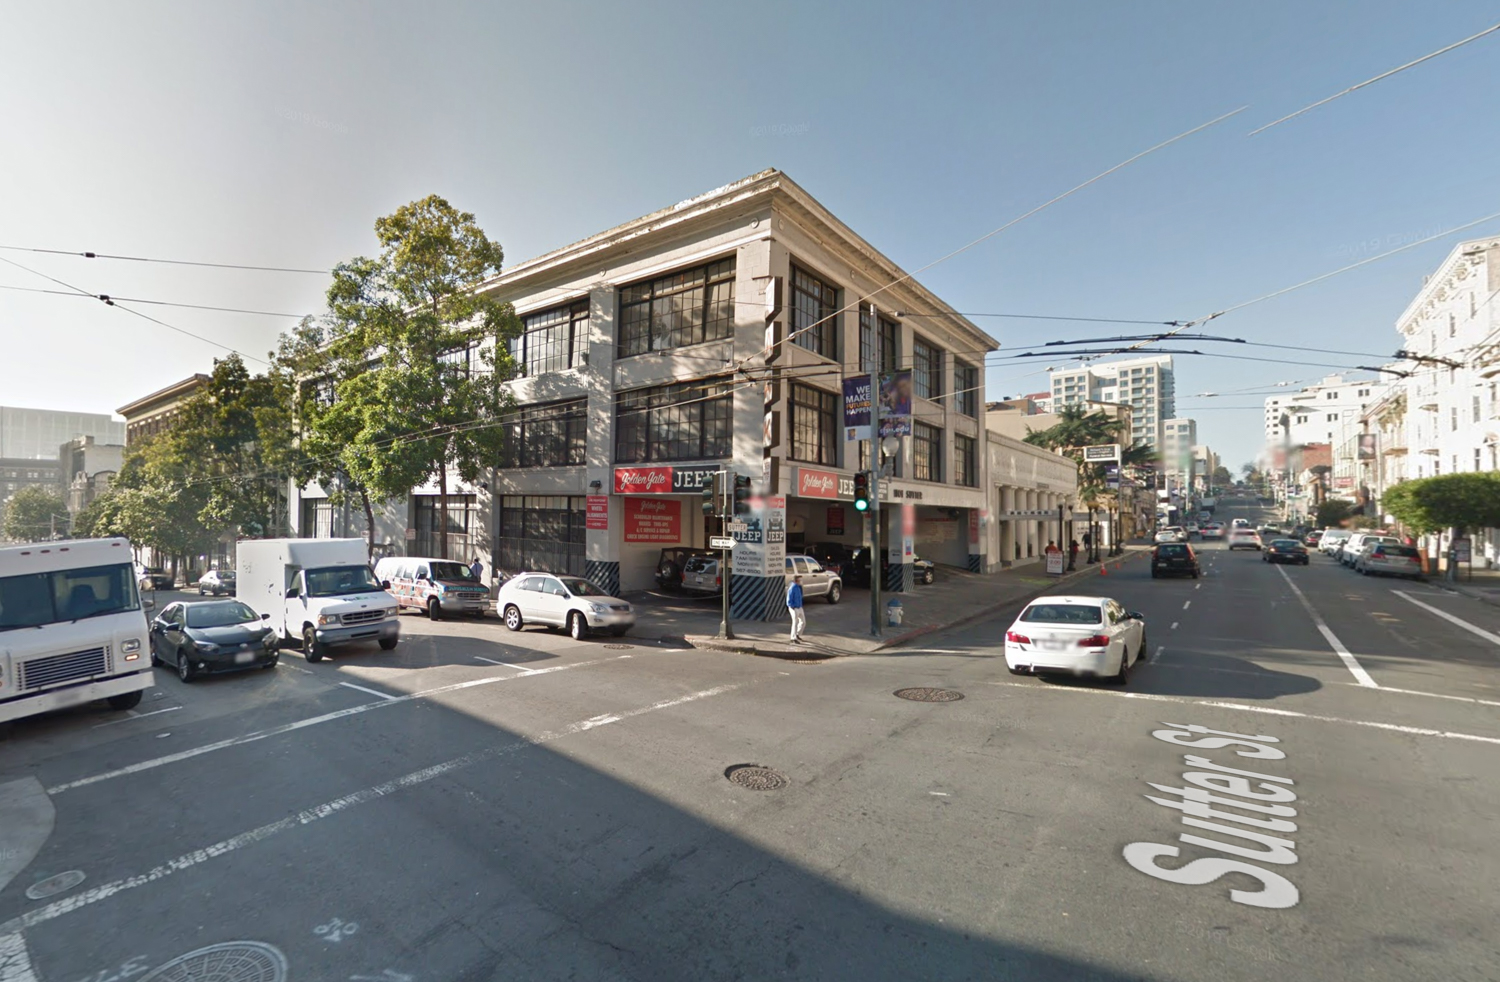 1101 Sutter Street, a landmarked building, image via Google Street View